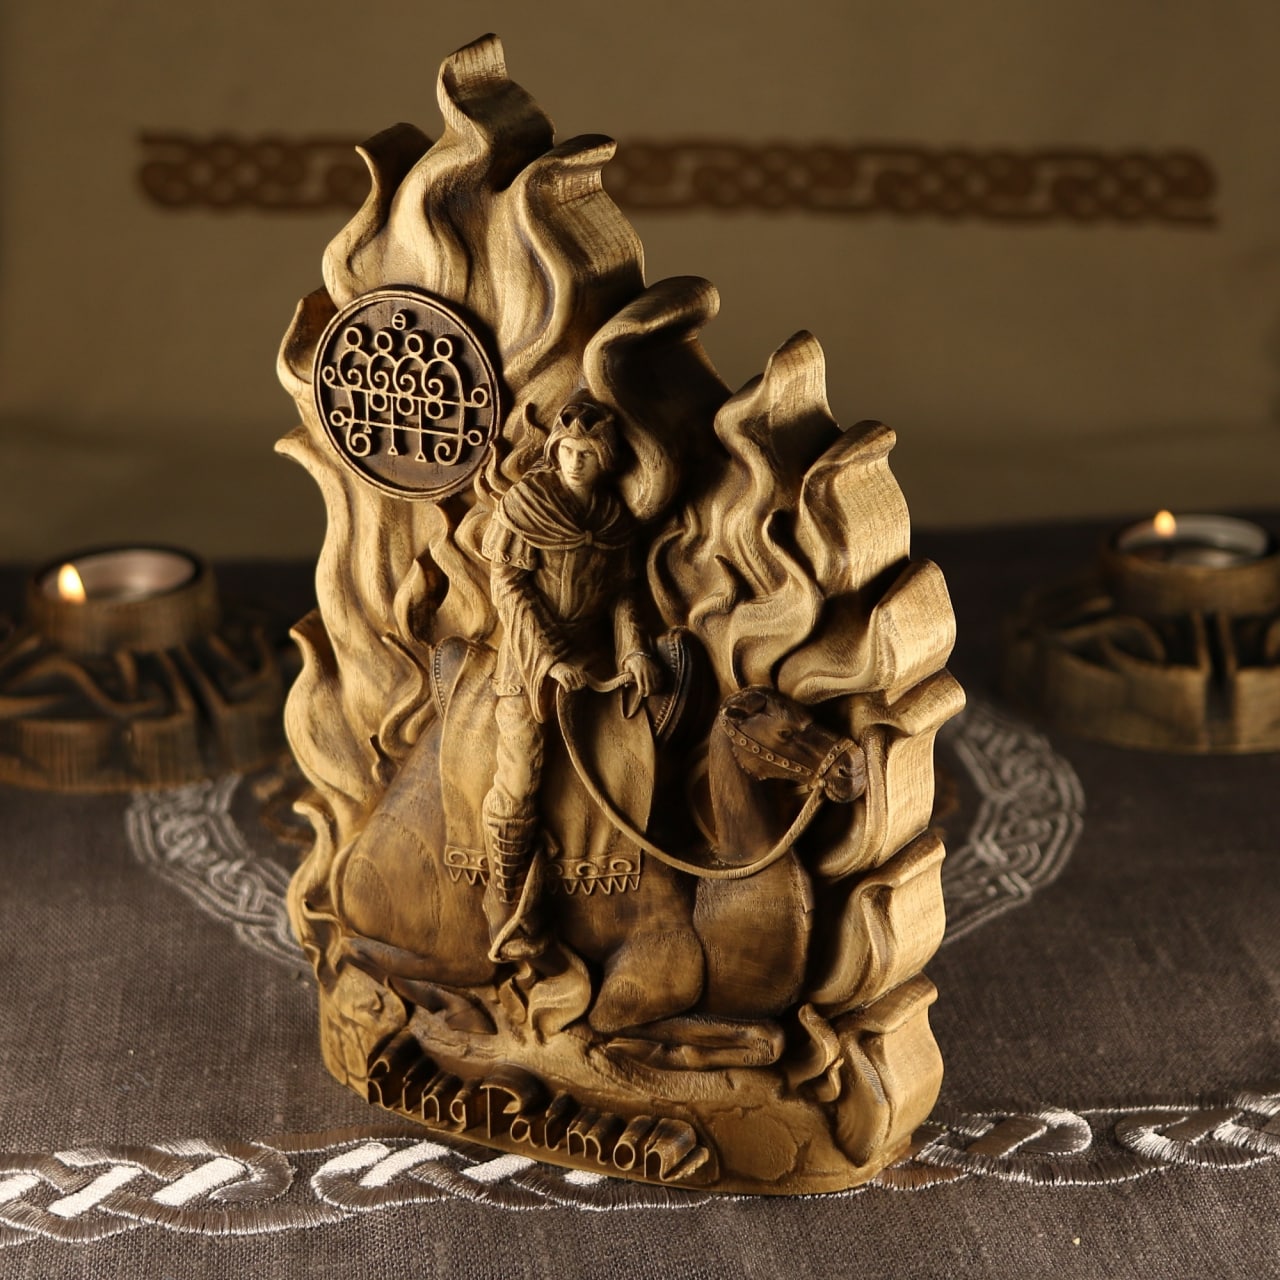 Wooden King Paimon Statue - Lucifer Altar, Occult Sculpture